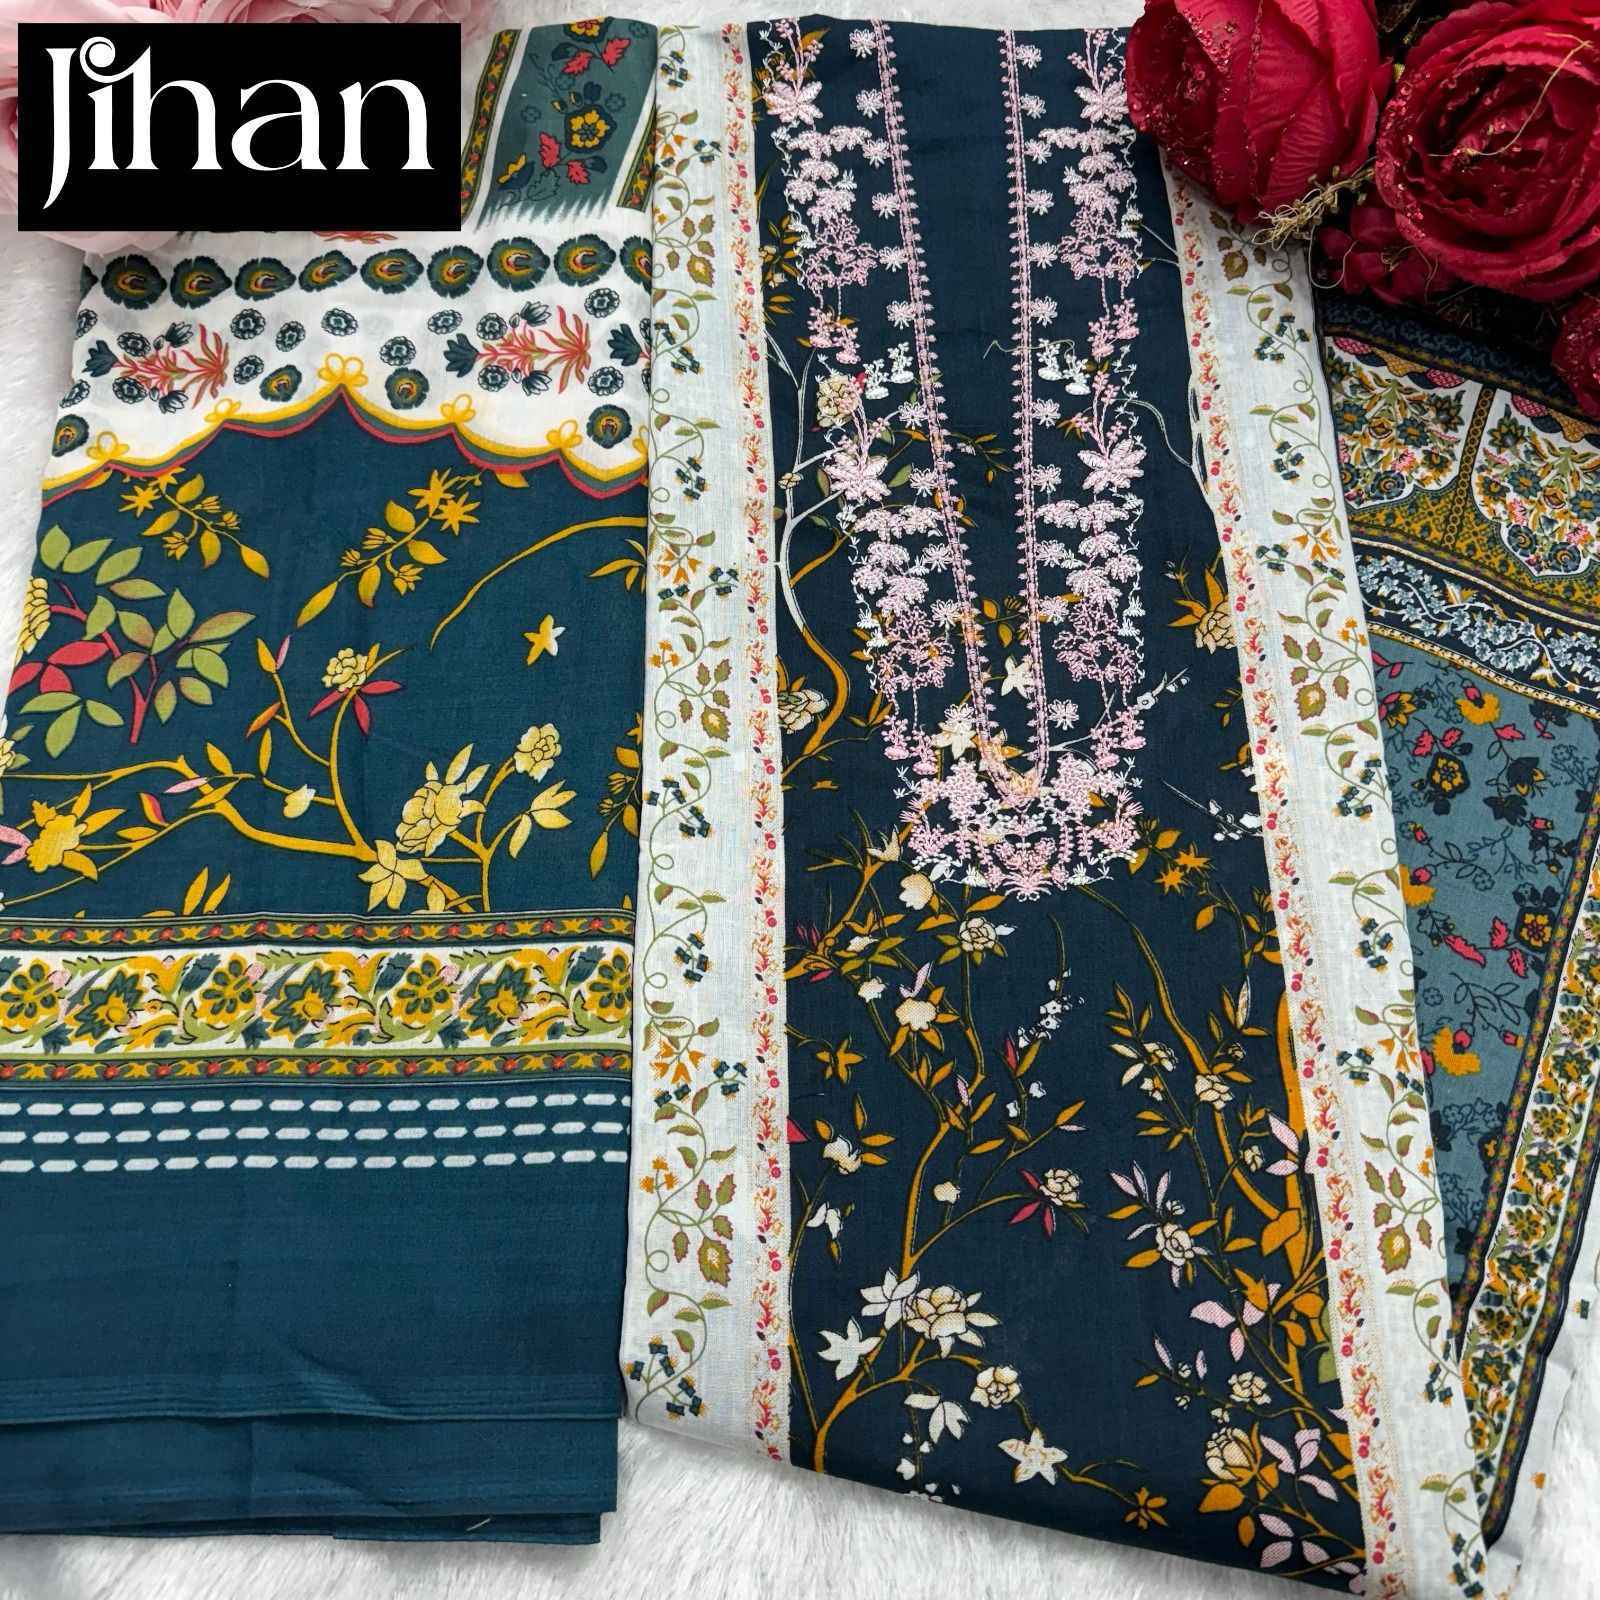 Jihan Firdous Morja Cotton Dress Material Wholesale Supplier Surat - Cotton dupatta